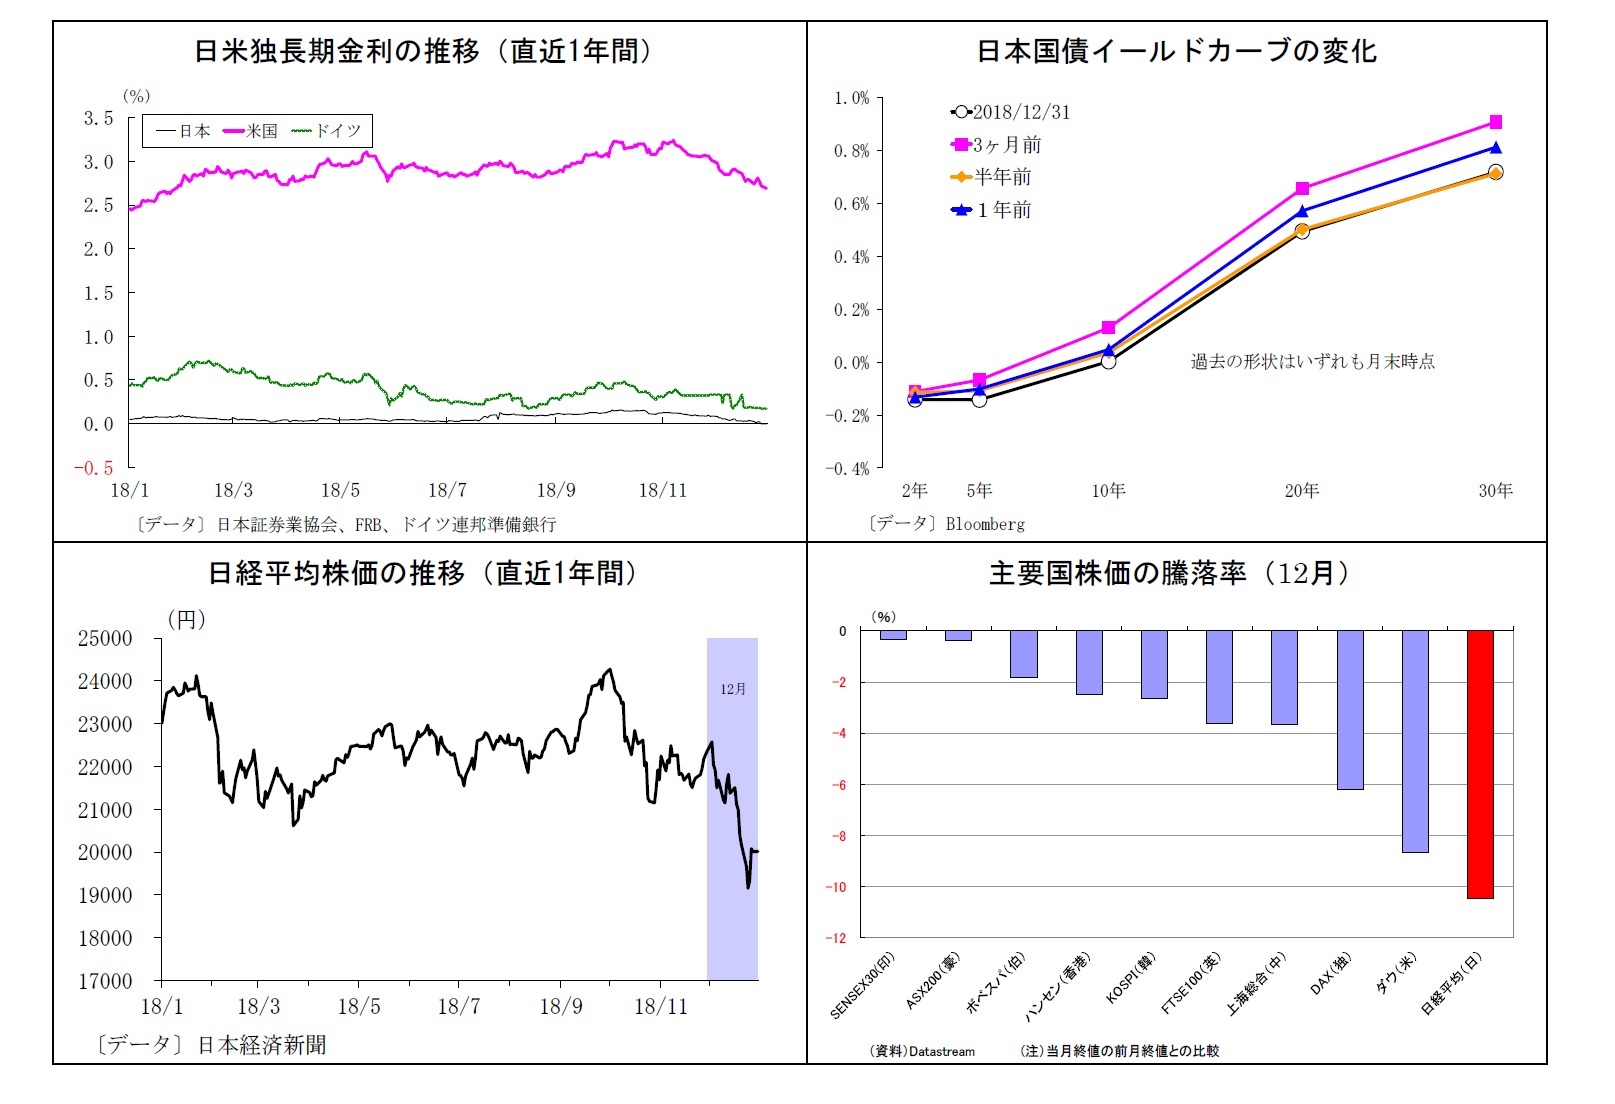 日米独長期金利の推移（直近1年間）/日本国債イールドカーブの変化/日経平均株価の推移（直近1年間）/主要国株価の騰落率（12月）